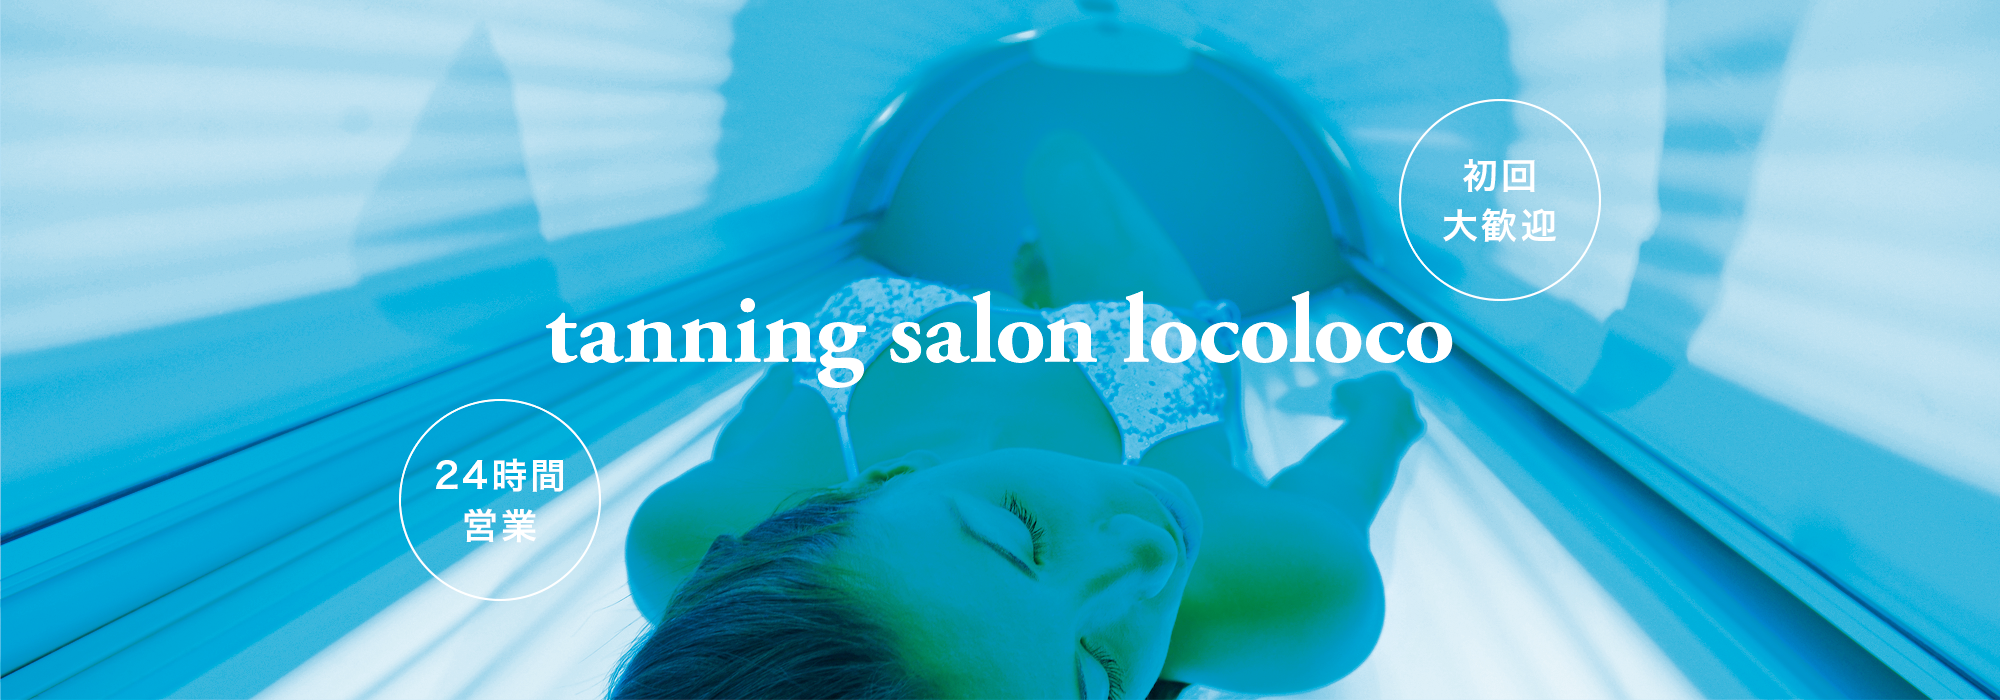 tanning salon locoloco